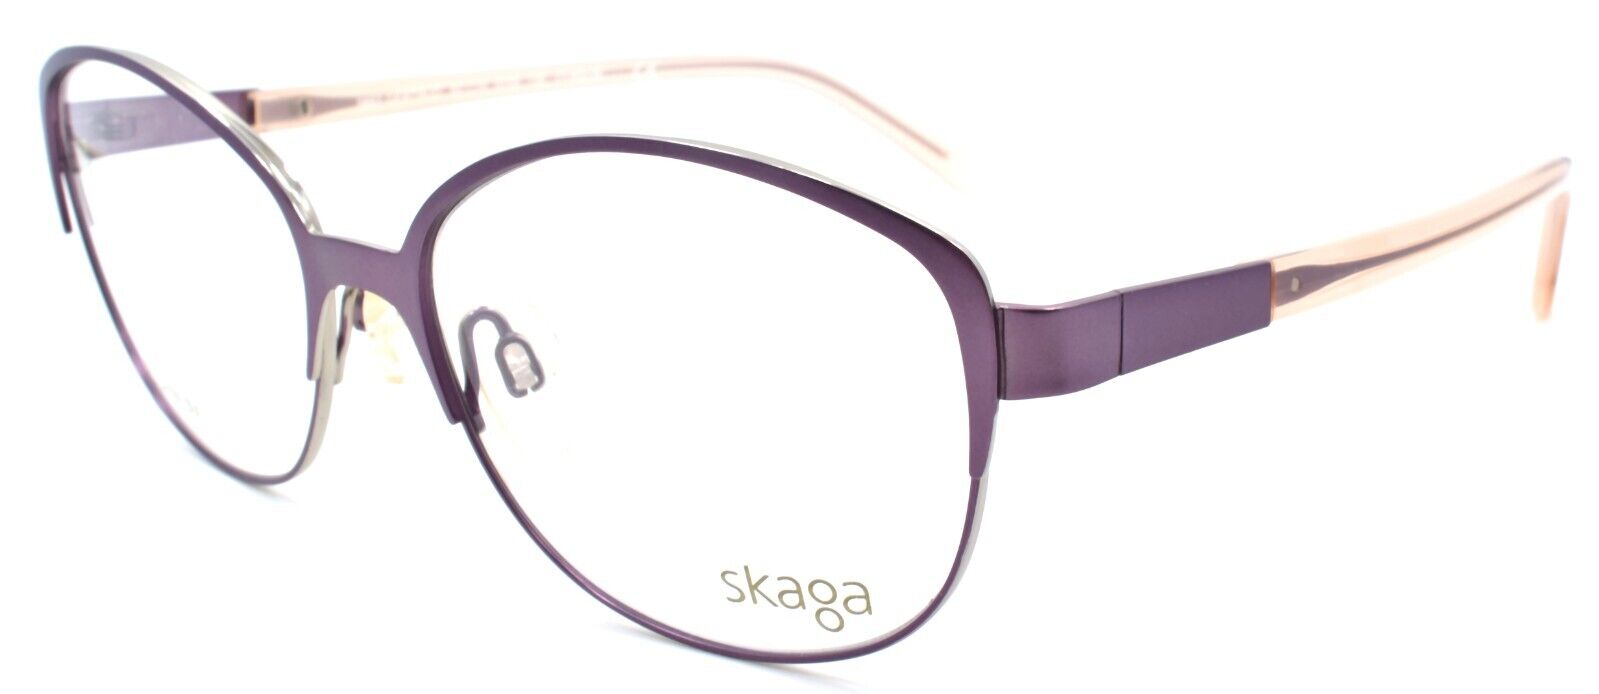 1-Skaga 3862 Ulrika 5109 Women's Eyeglasses Frames Titanium 52-15-135 Lilac-Does not apply-IKSpecs